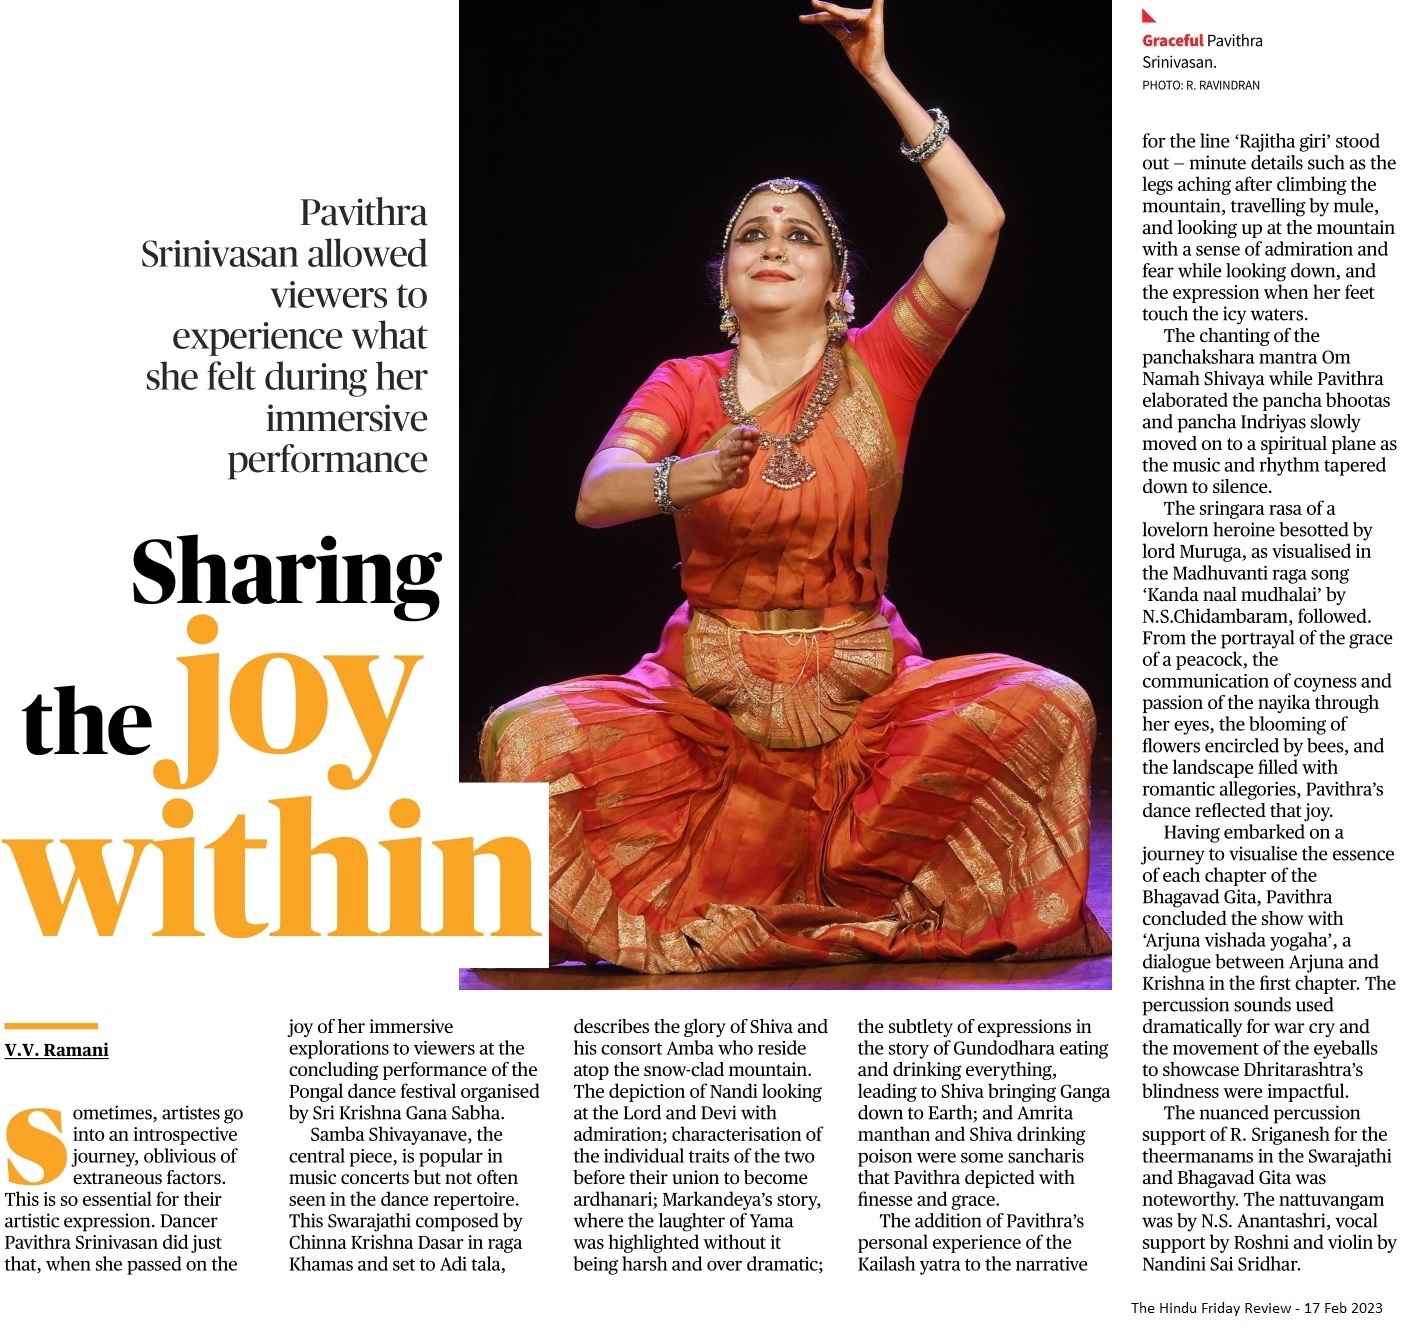 Sharing the joy within - V.V. Ramani